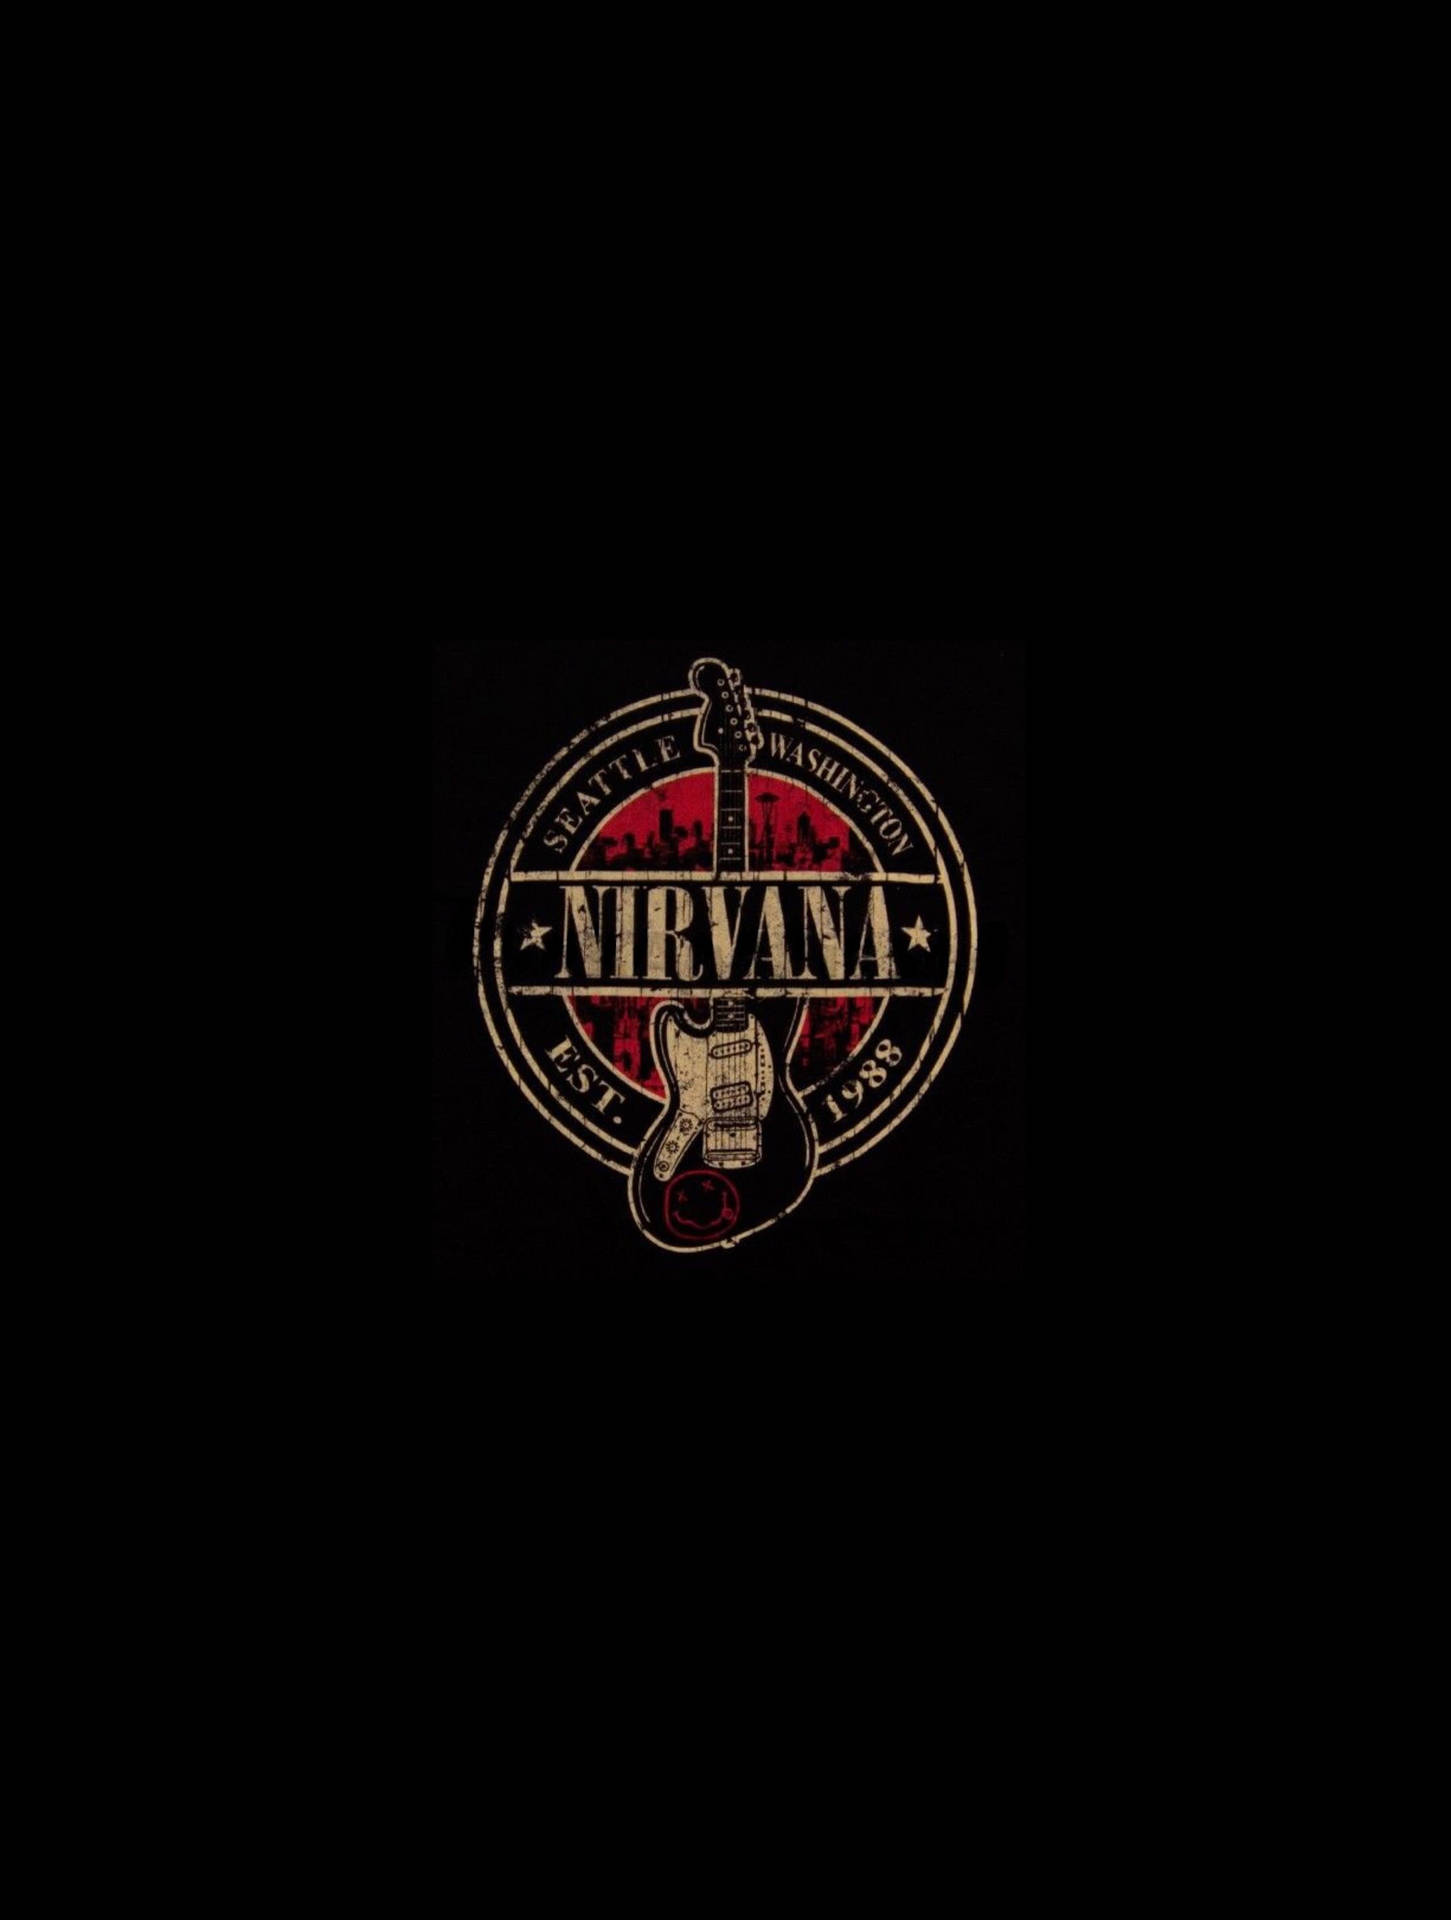 Nirvana Band Logo On A Black Background Background